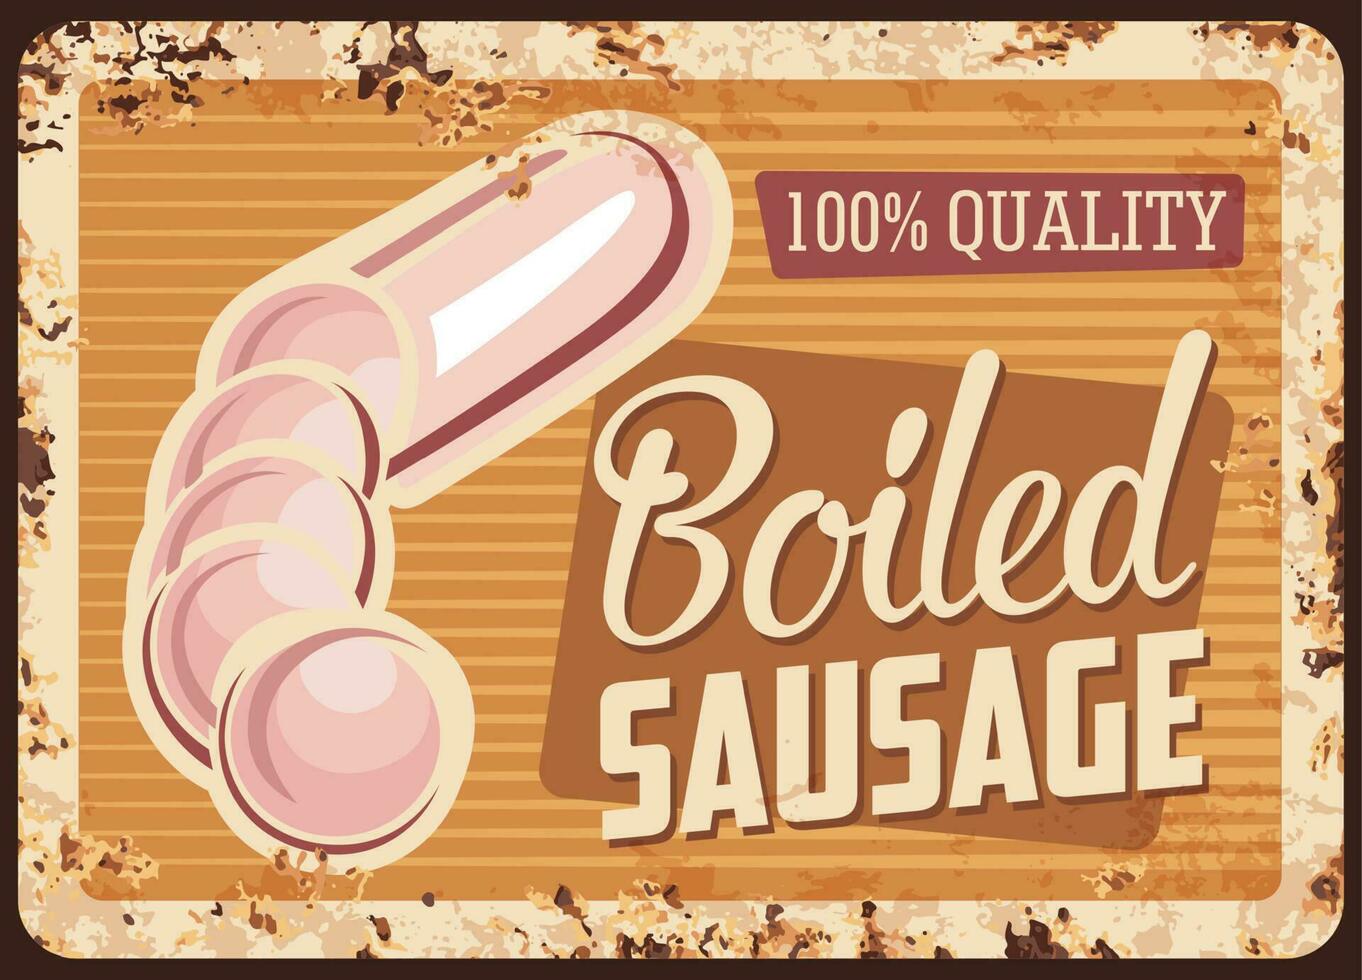 Boiled sausage rusty metal plate, bbq gourmet menu vector